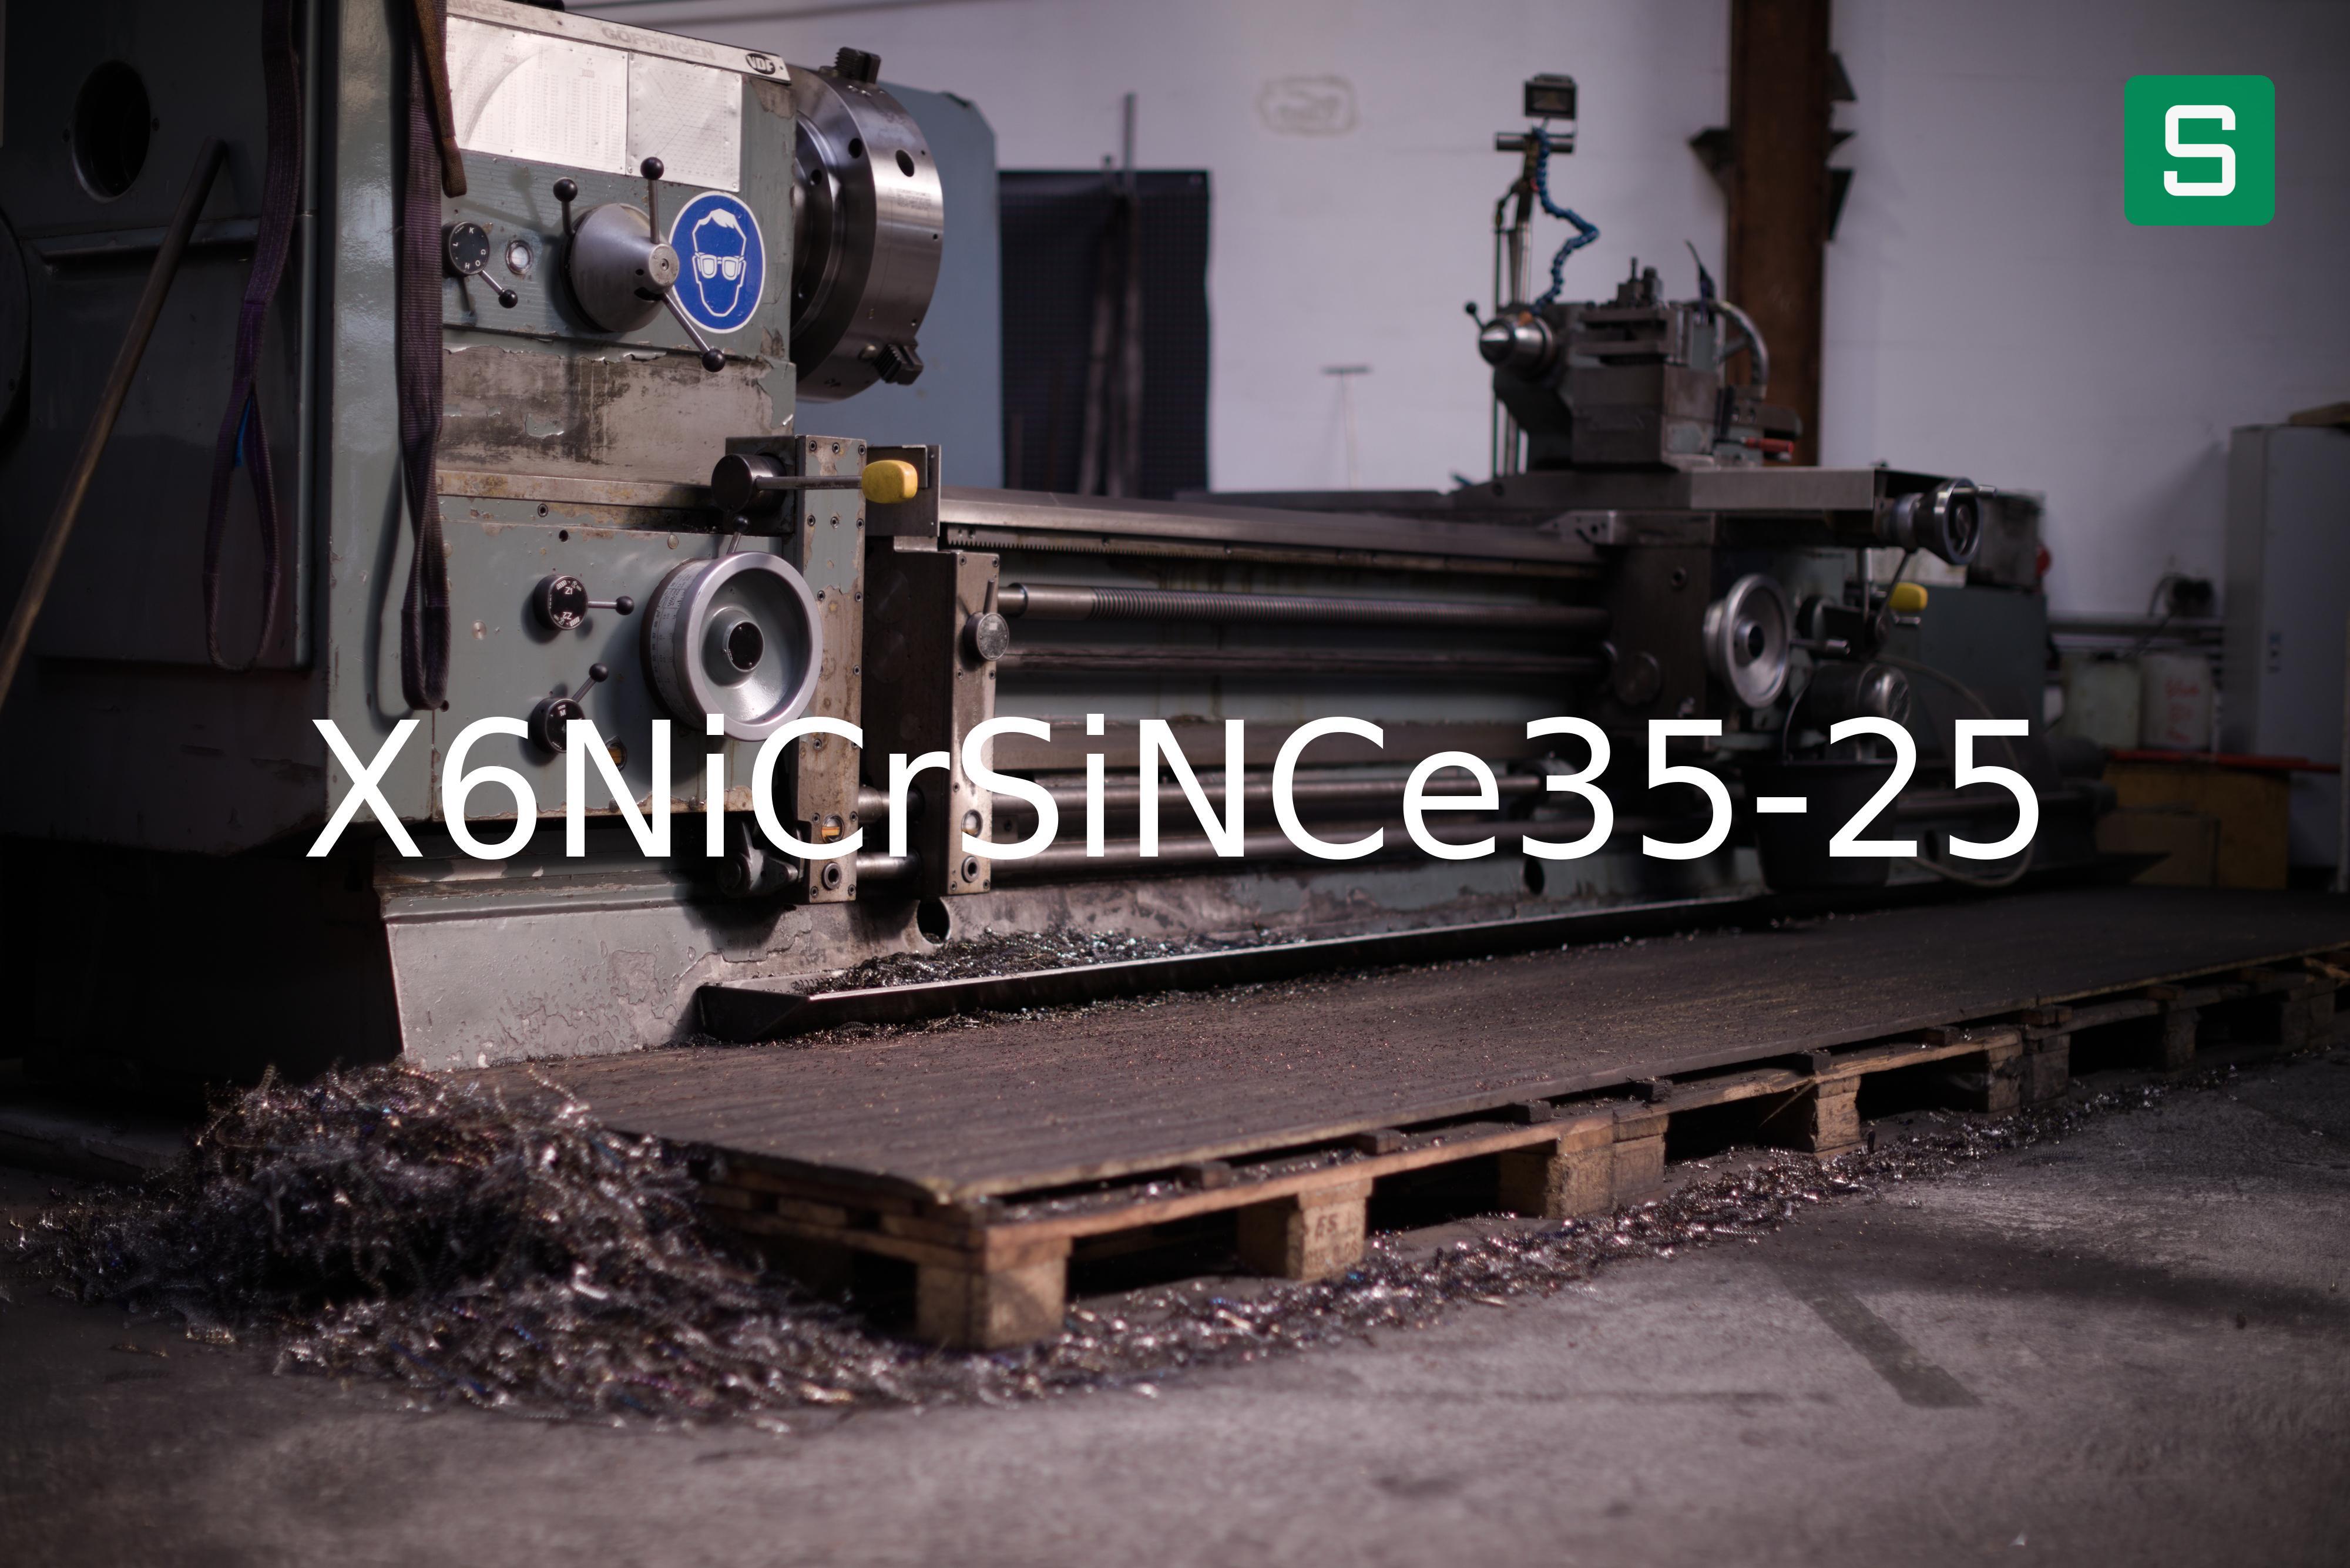 Steel Material: X6NiCrSiNCe35-25